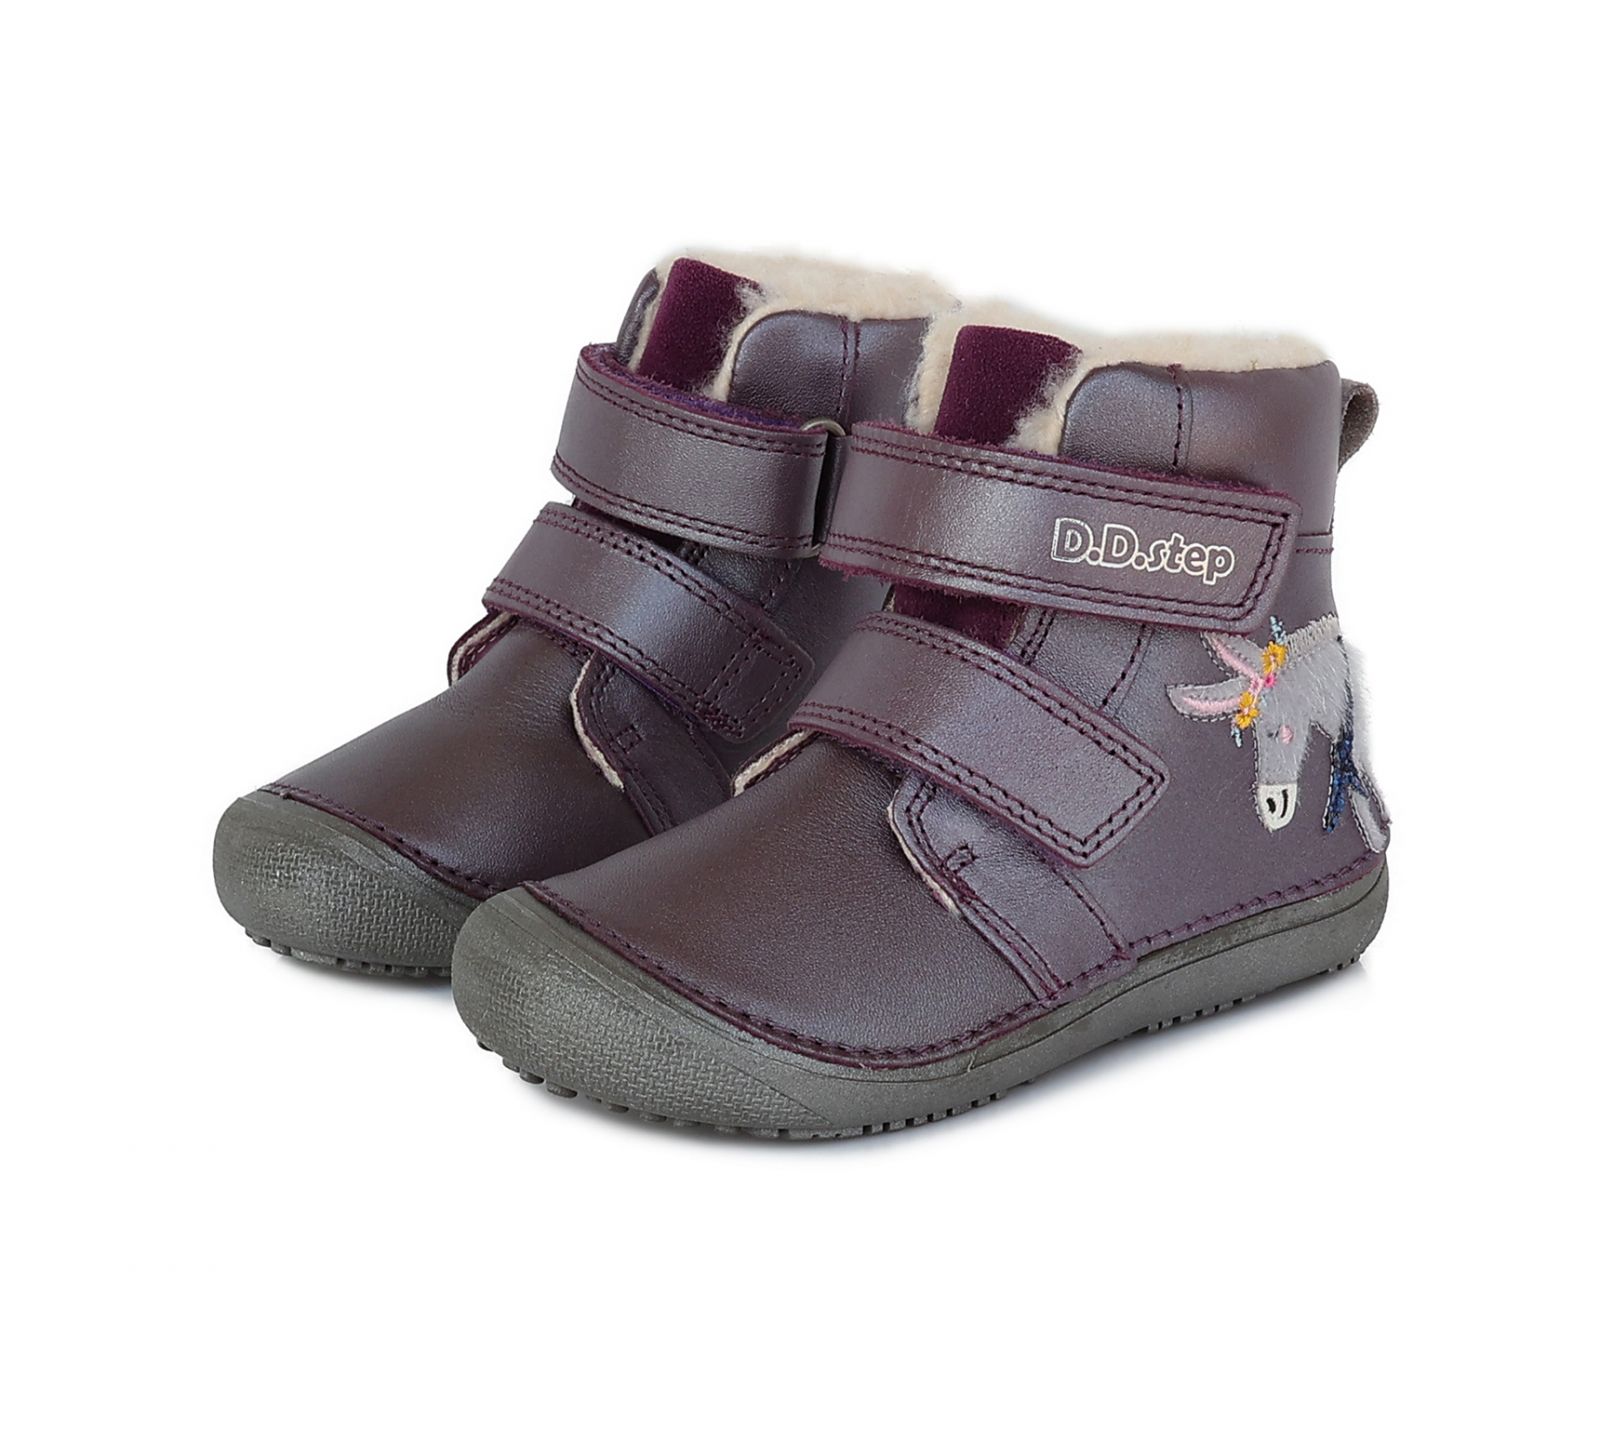 Barefoot DDstep 063 winter boots - purple - donkey